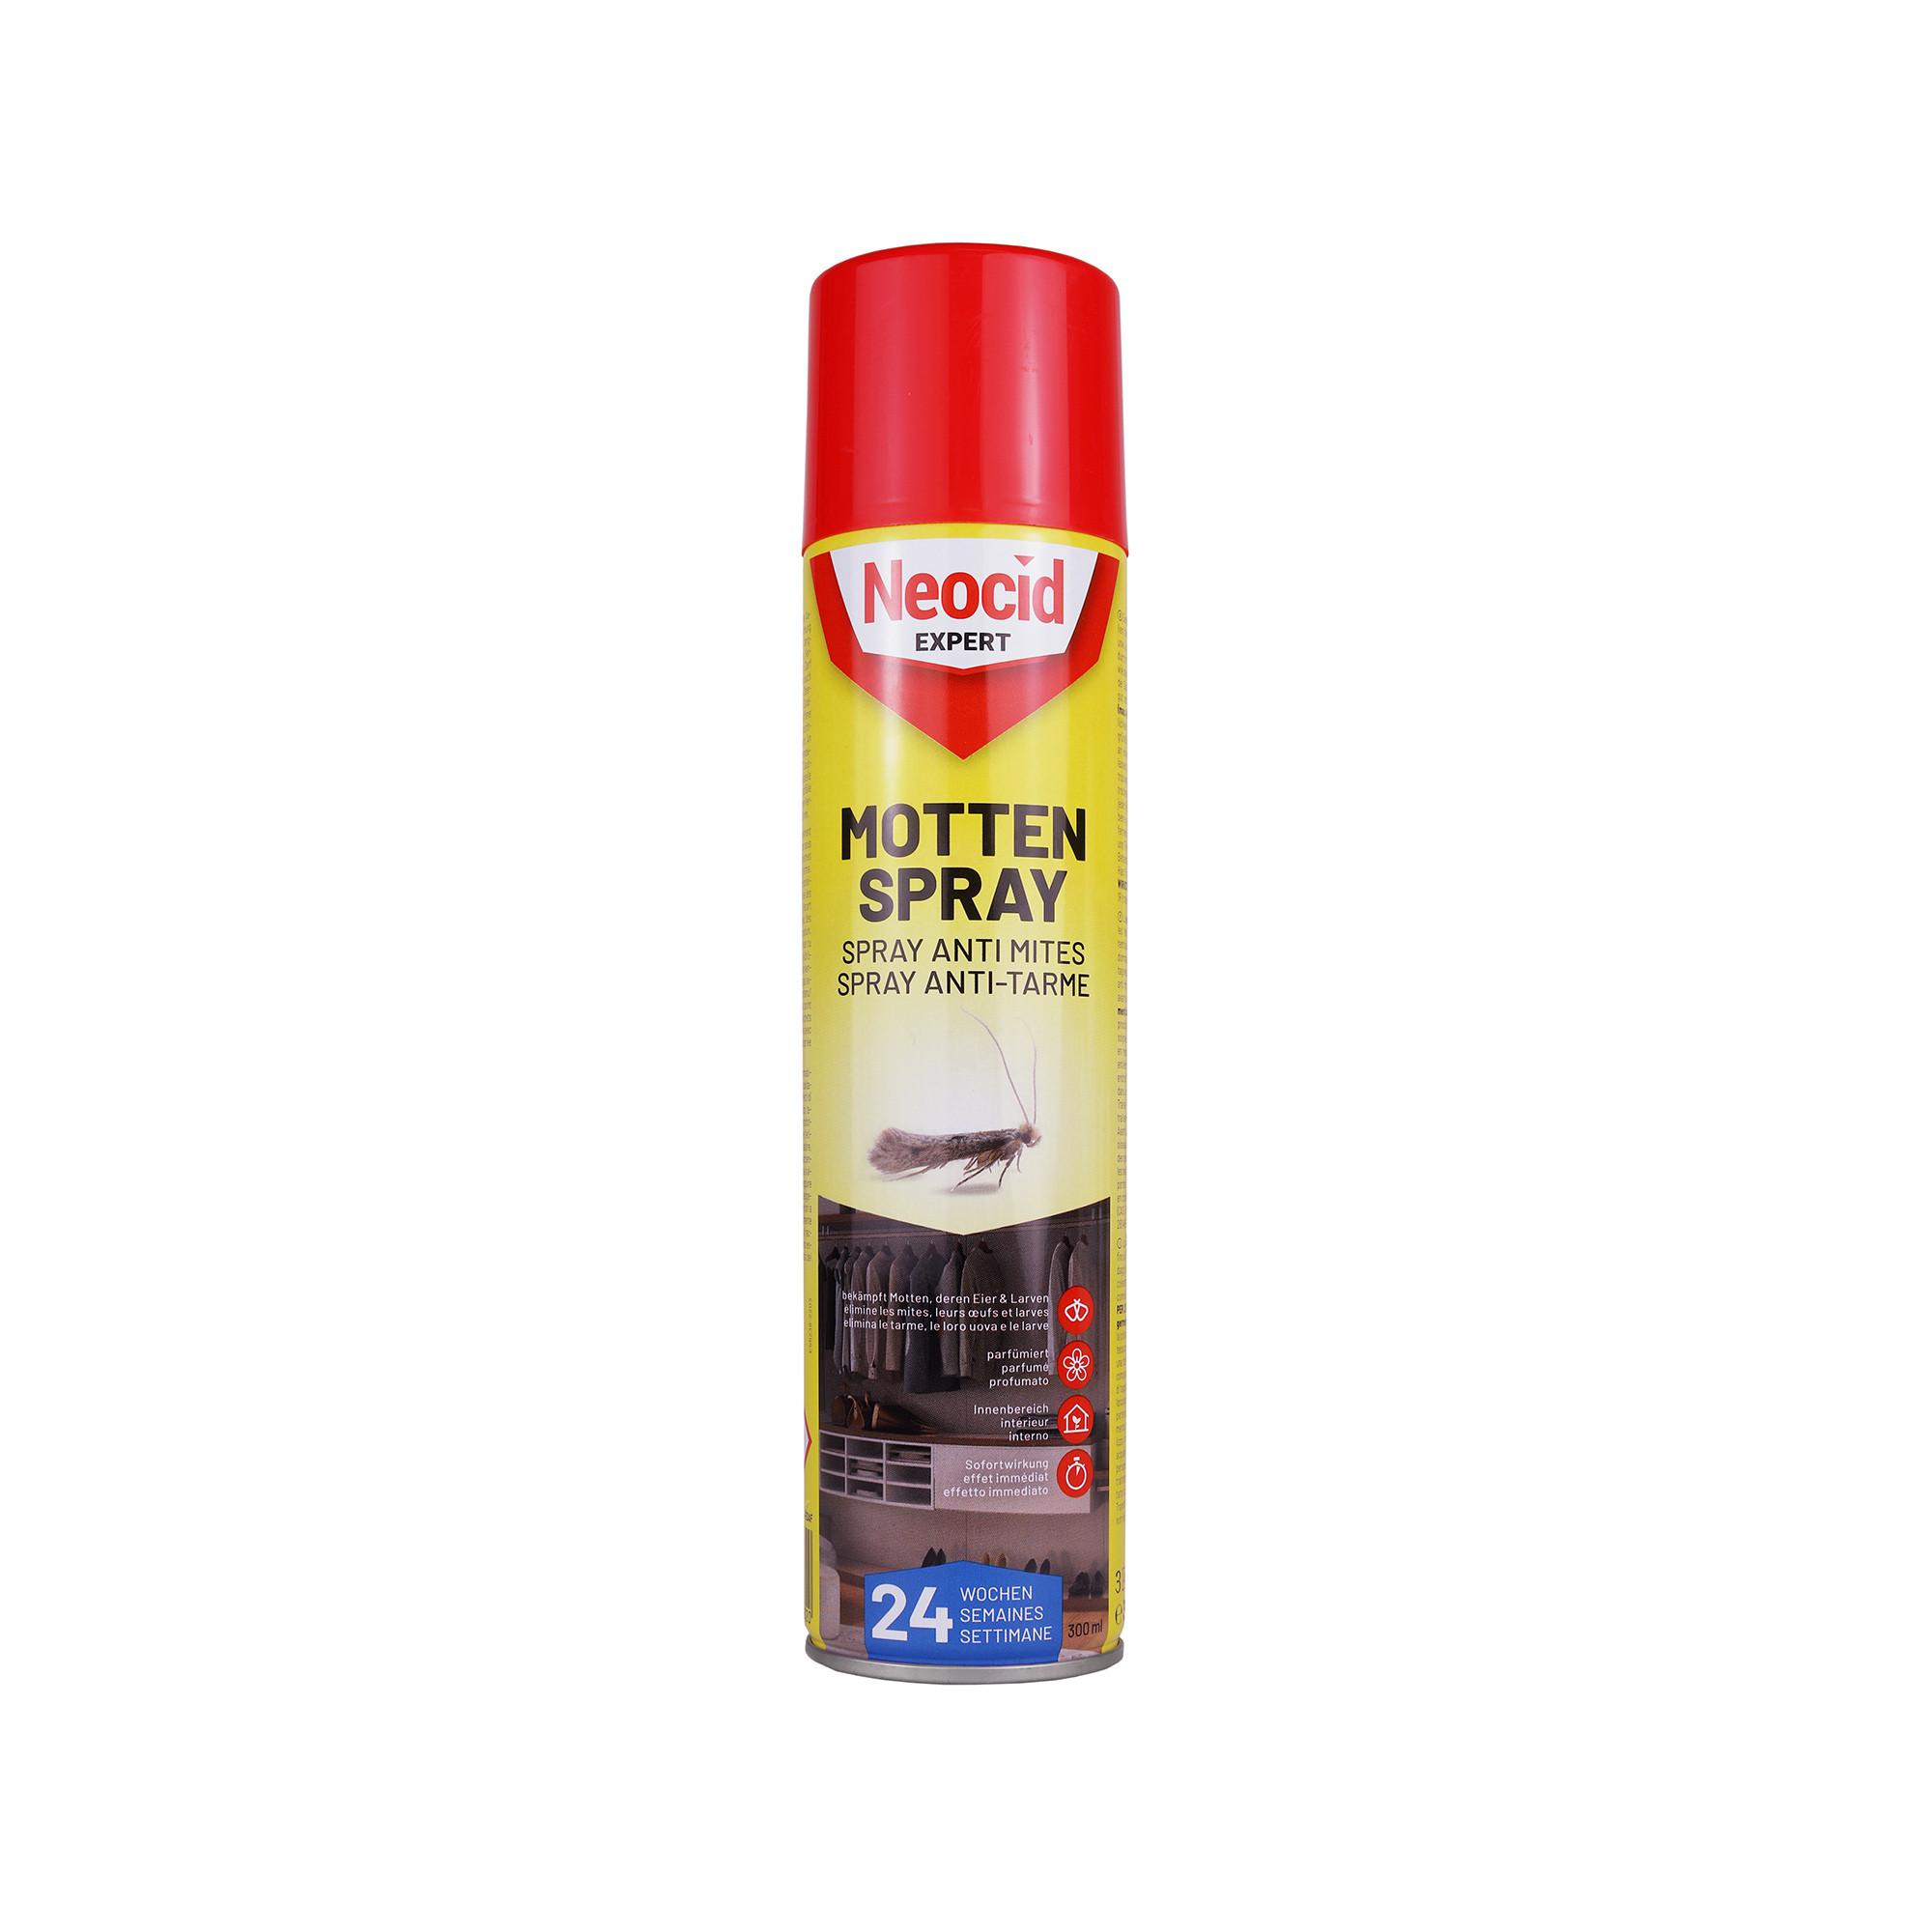 Neocid EXPERT Motten Spray  